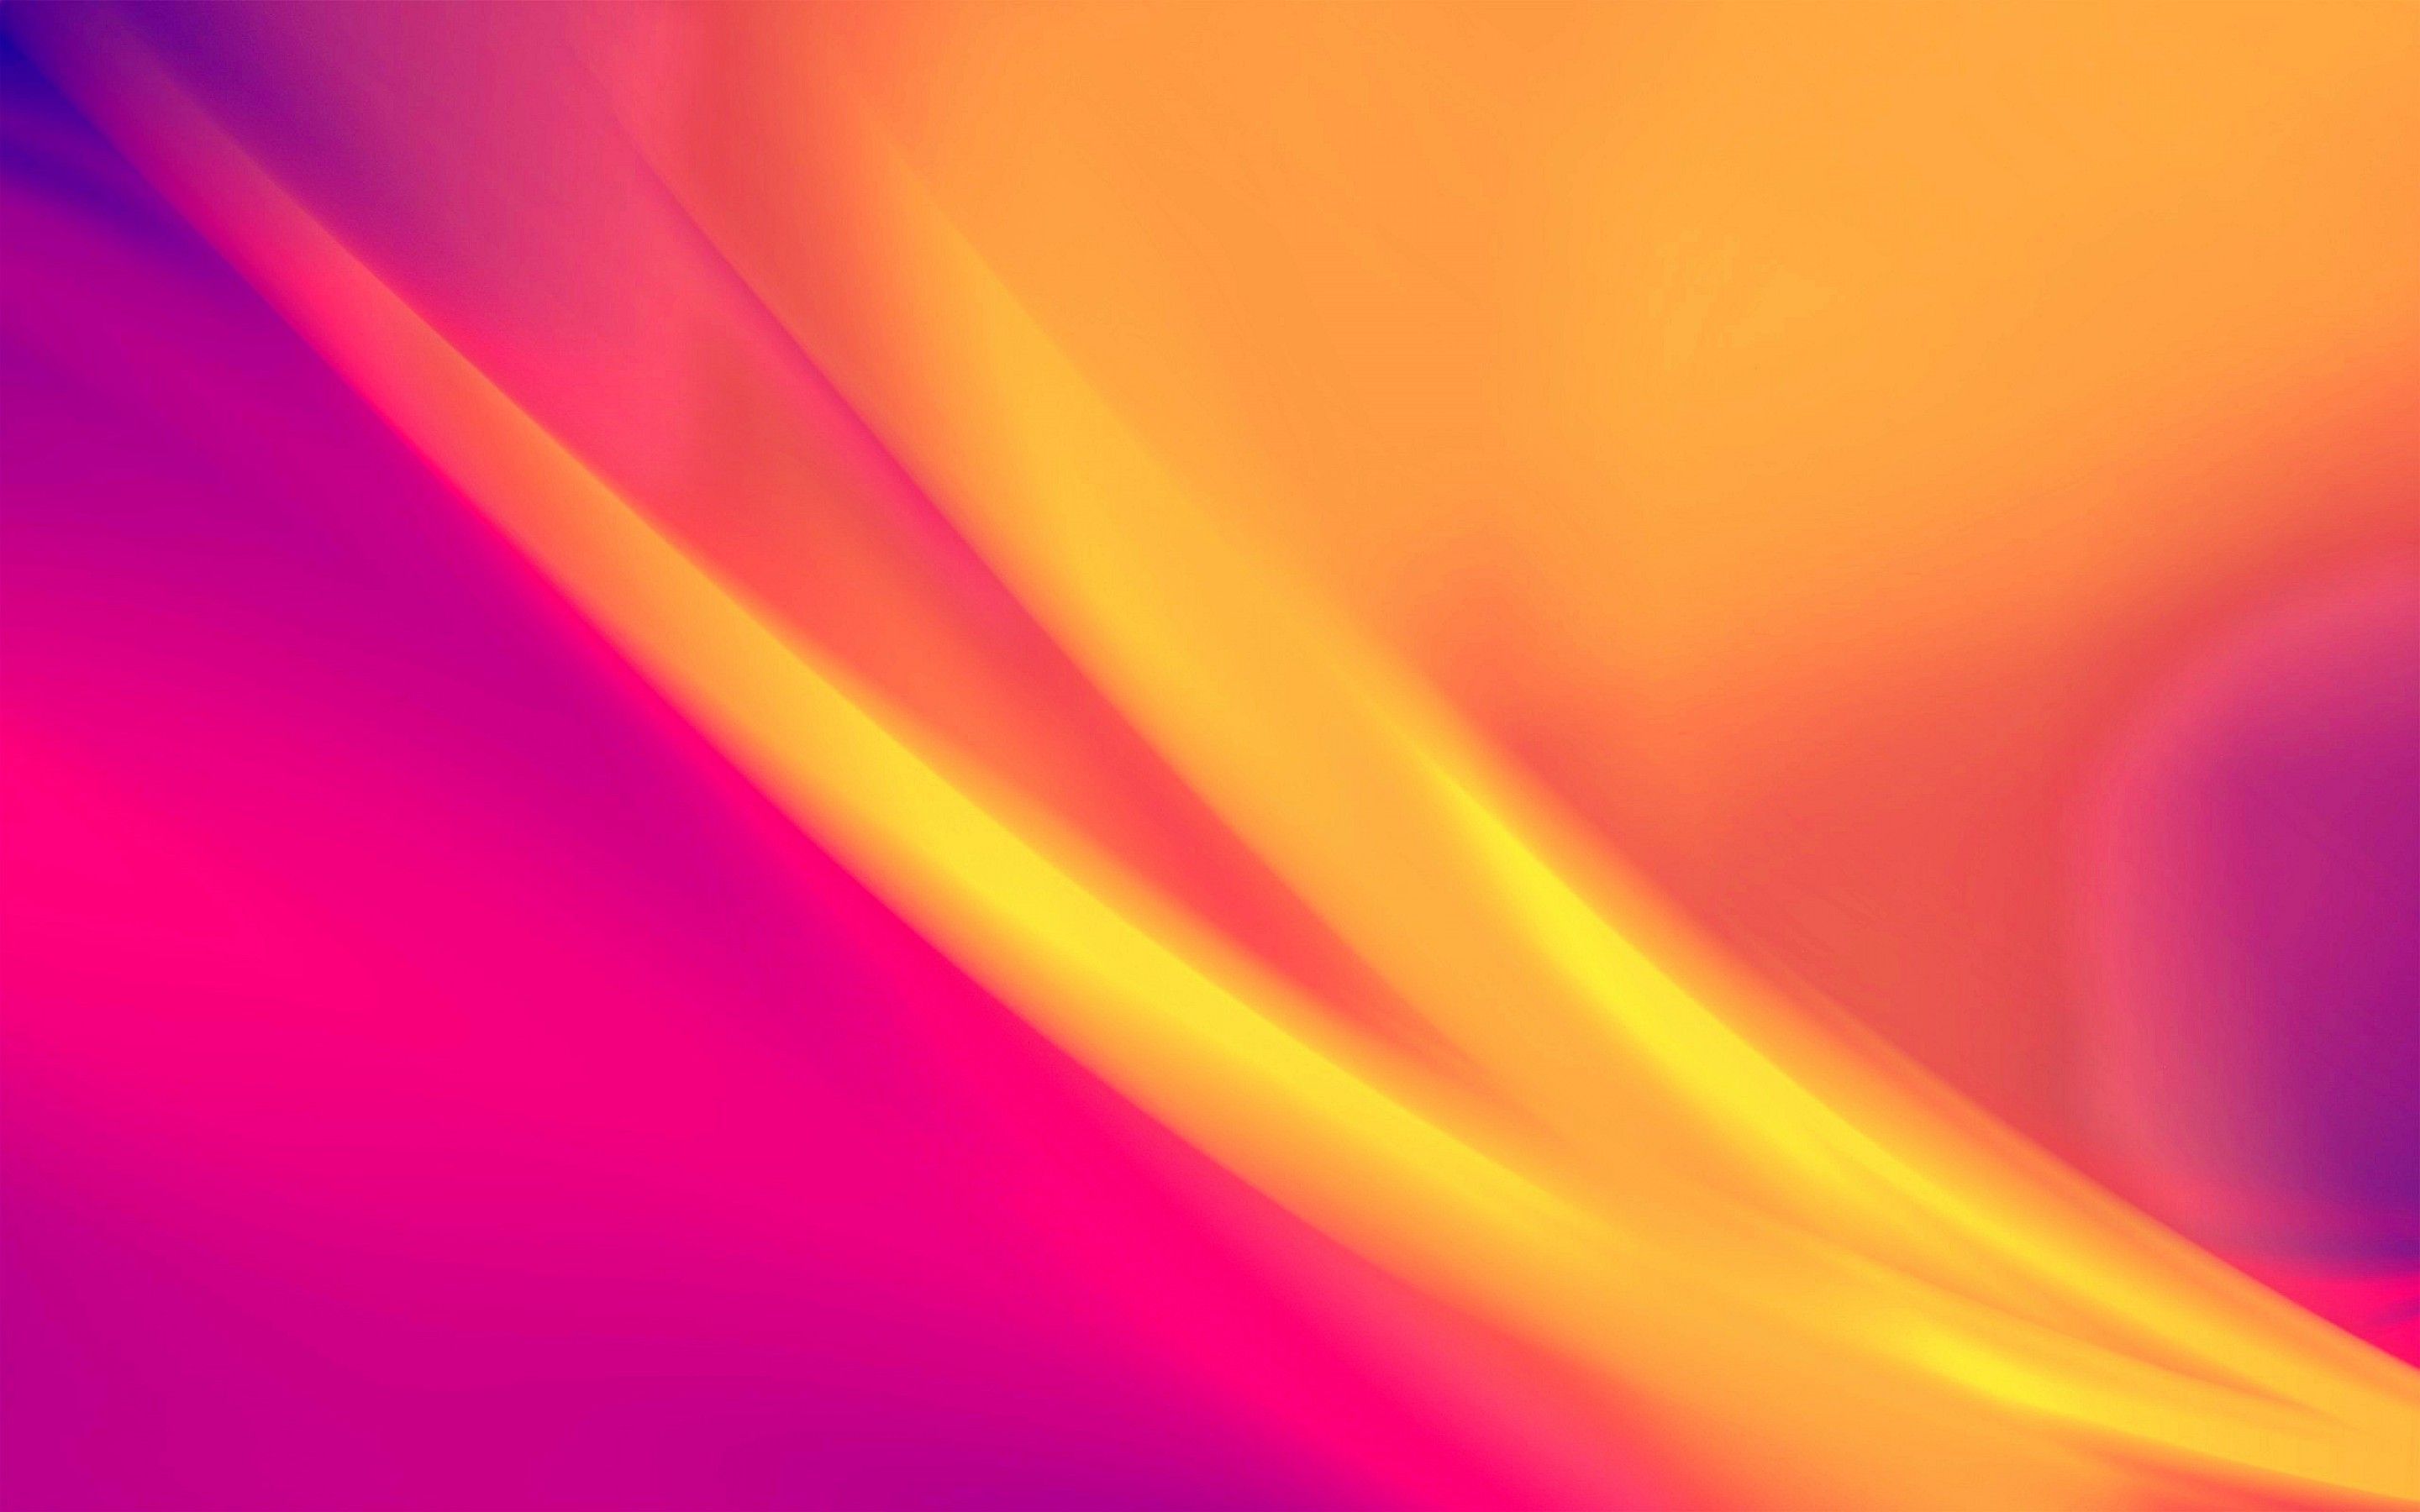 Wallpaper bright colors hypnotic circular visual effect images for  desktop section абстракции  download